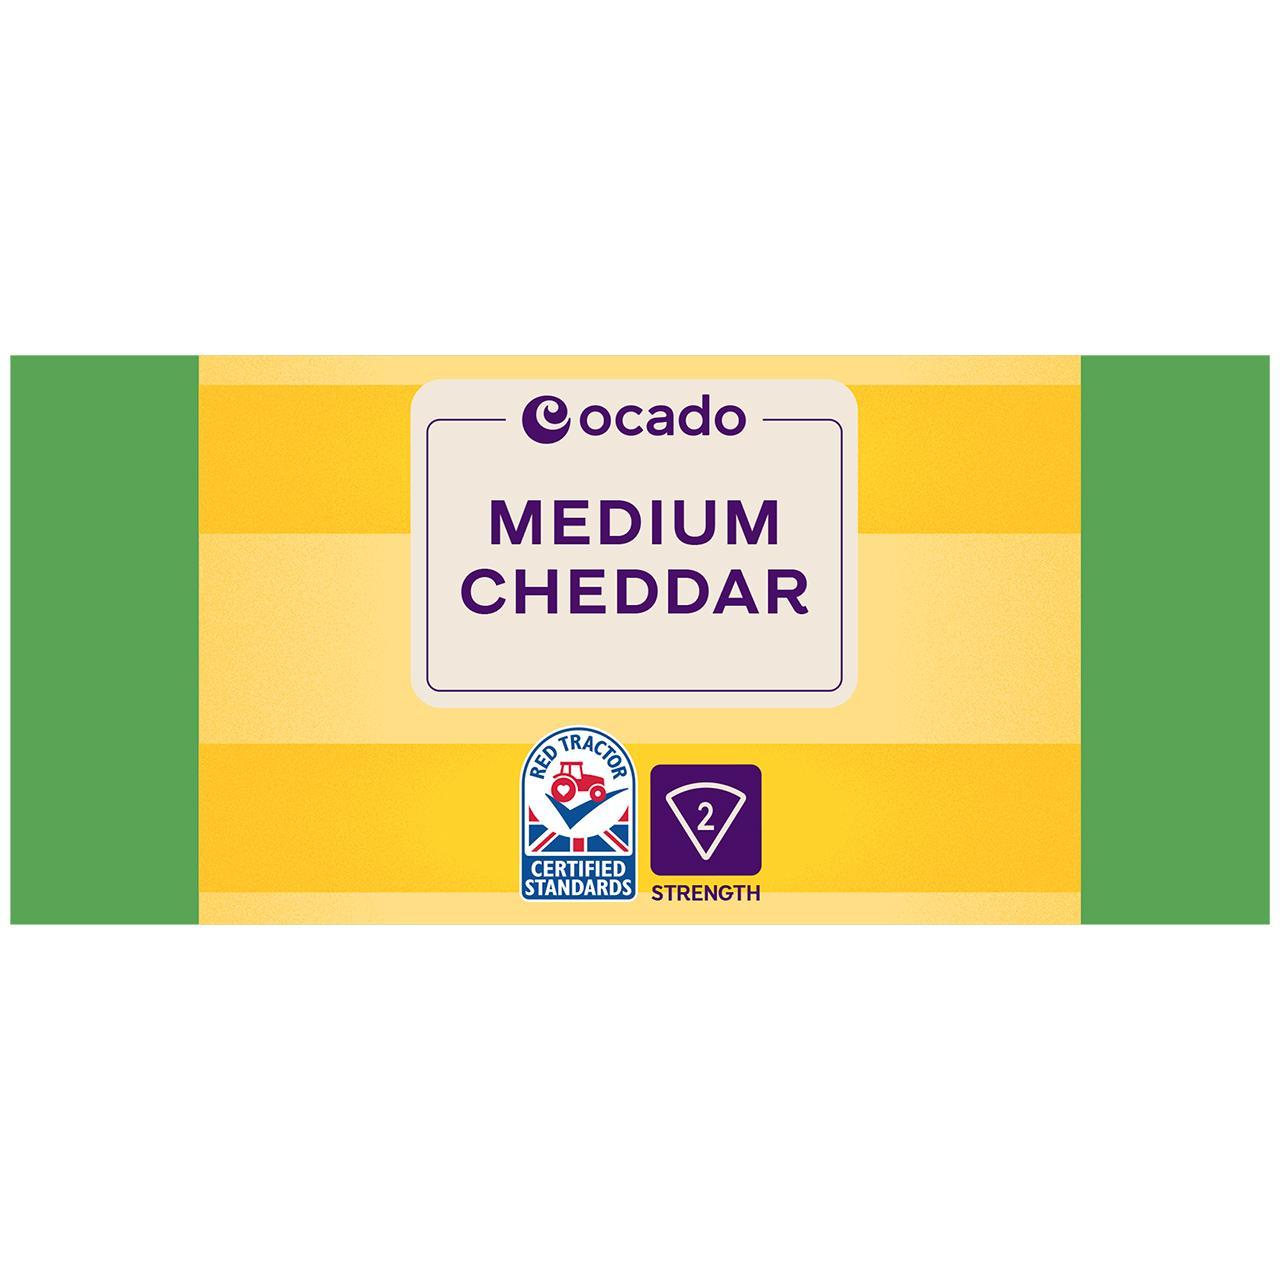 Ocado Medium Cheddar